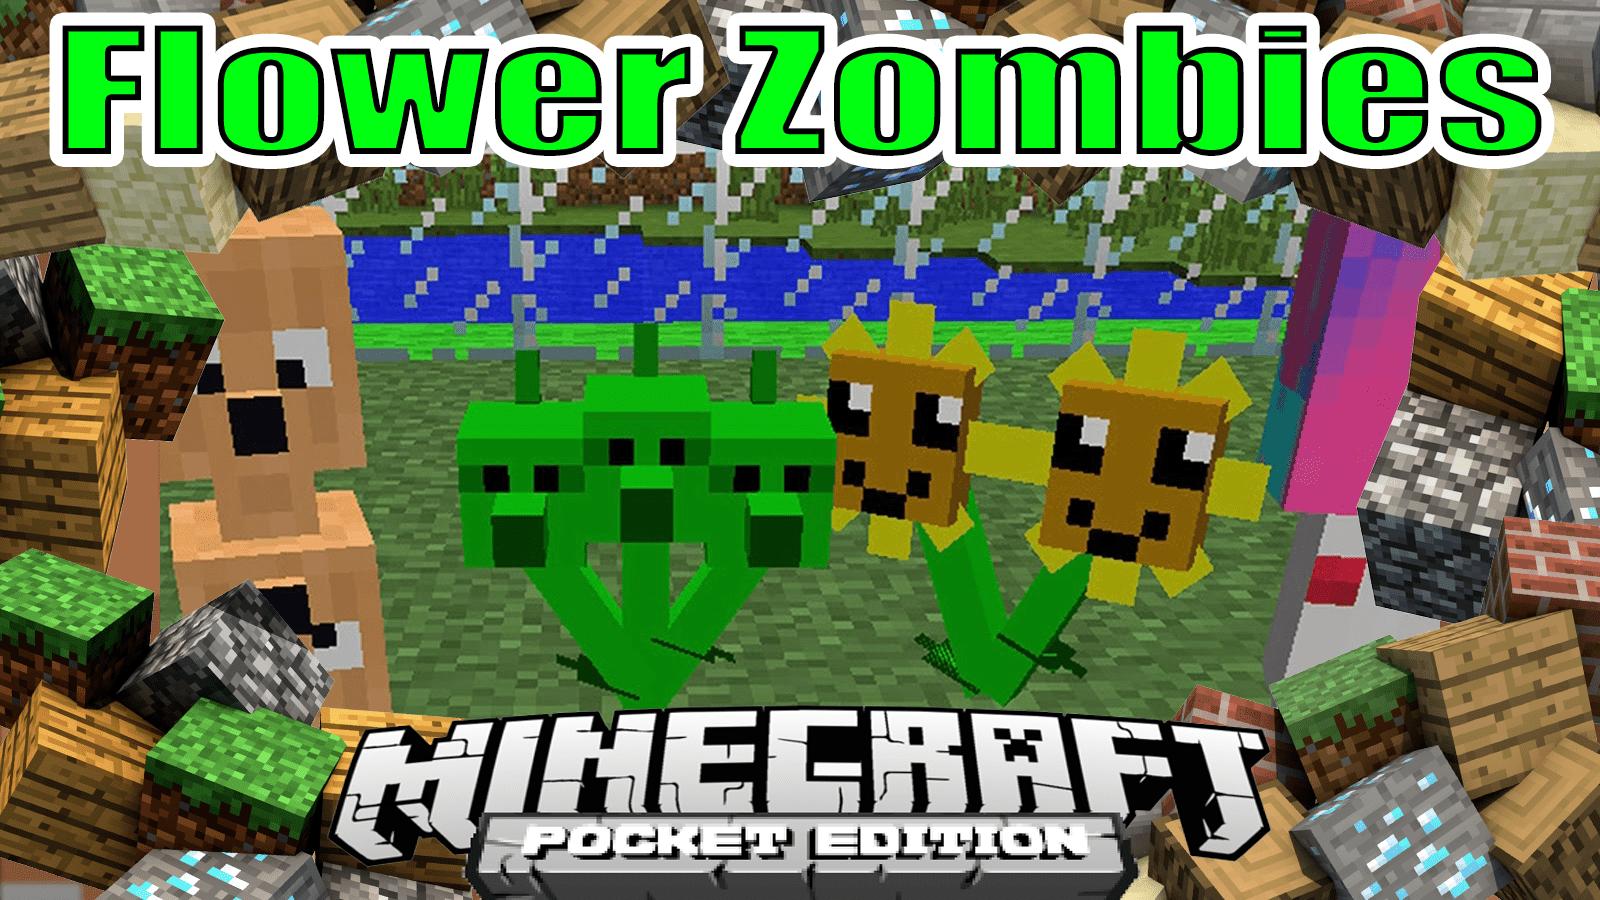 Plants Vs Zombies 2 Addon - Bedrock Minecraft Mod